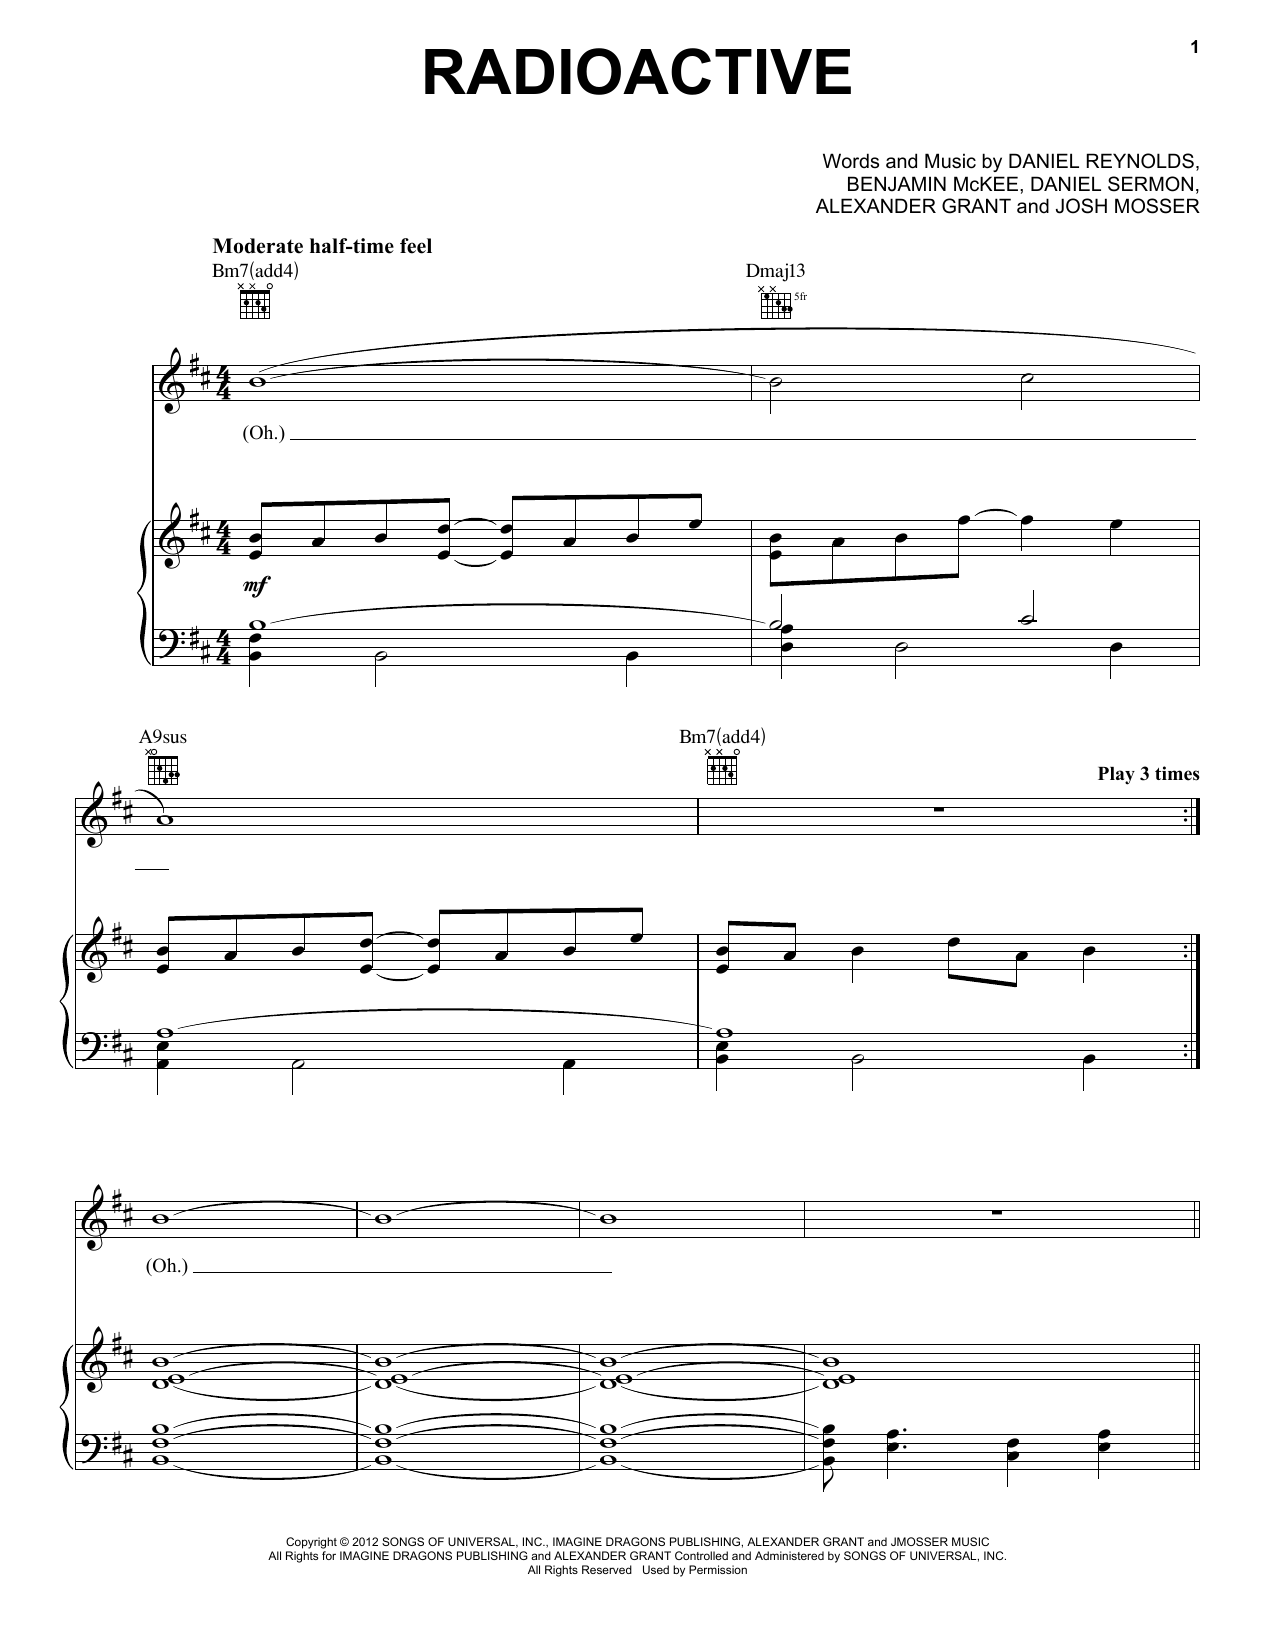 Imagine Dragons Radioactive Sheet Music Notes & Chords for Guitar Tab - Download or Print PDF